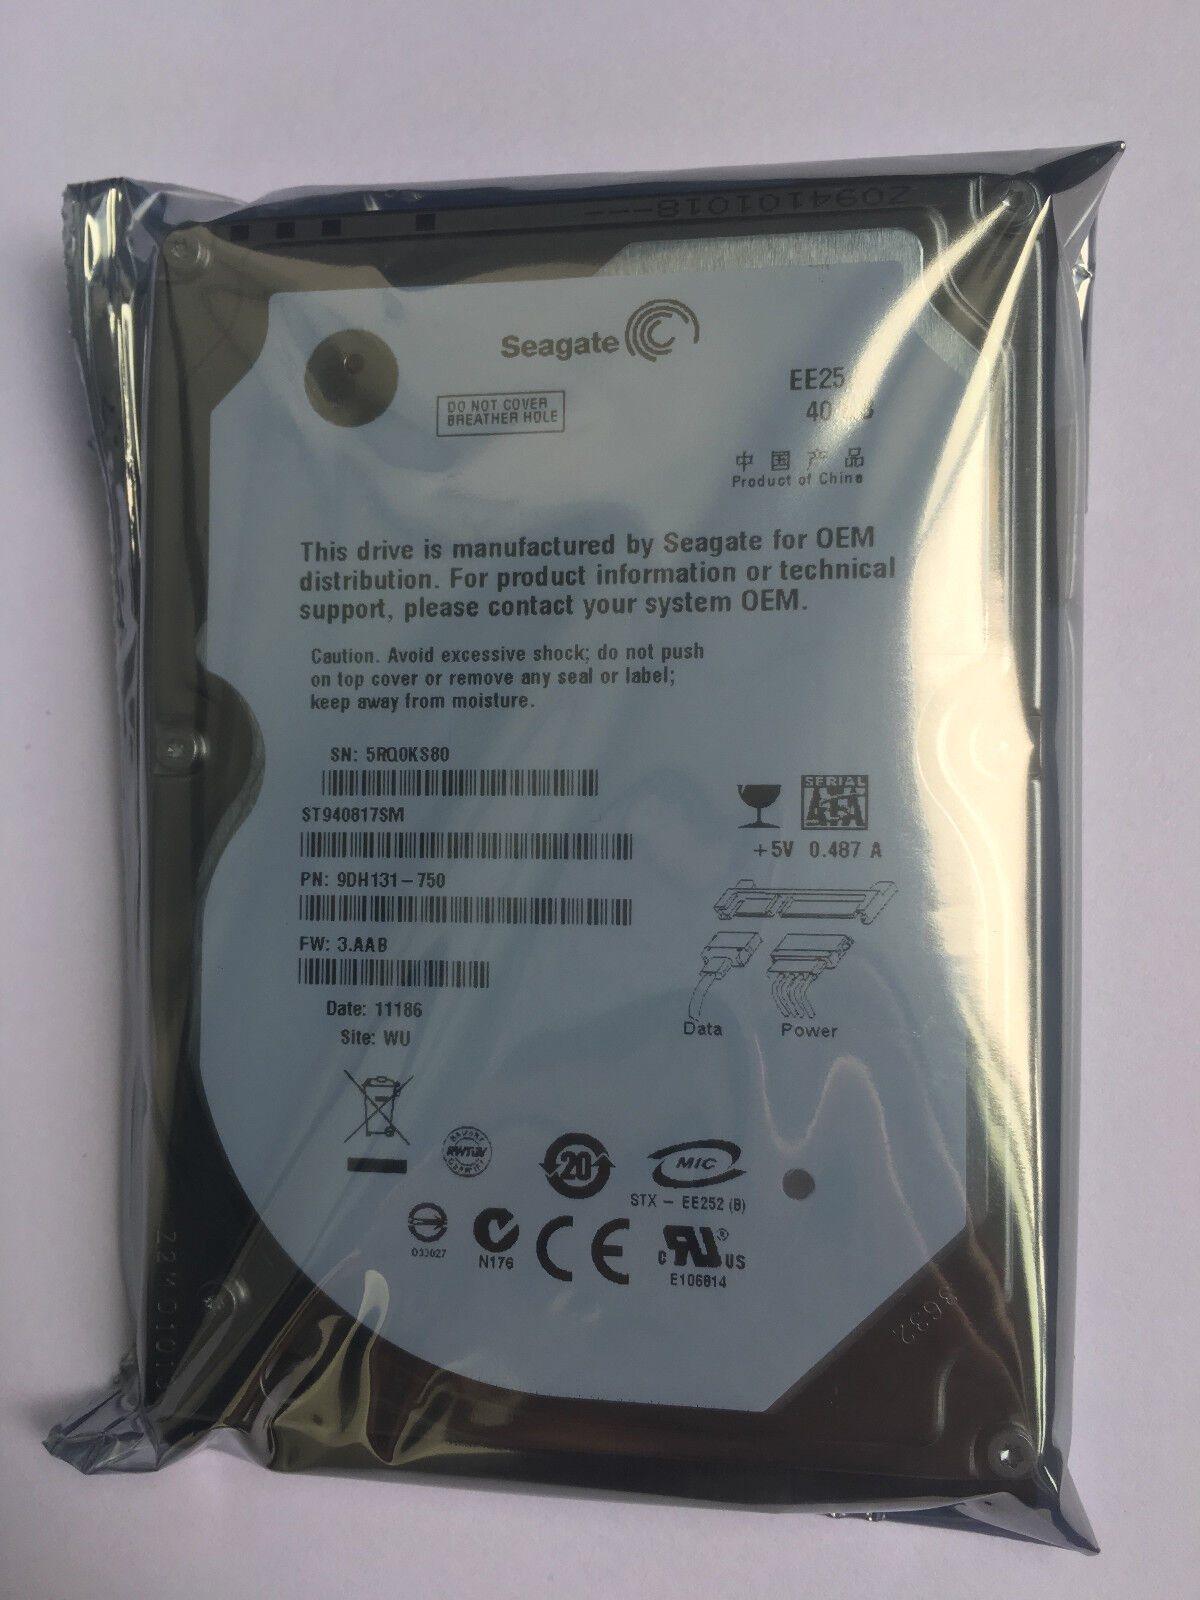  Seagate EE25.2 ST940817SM 40GB HDD Hard drive 5400RPM 2.5